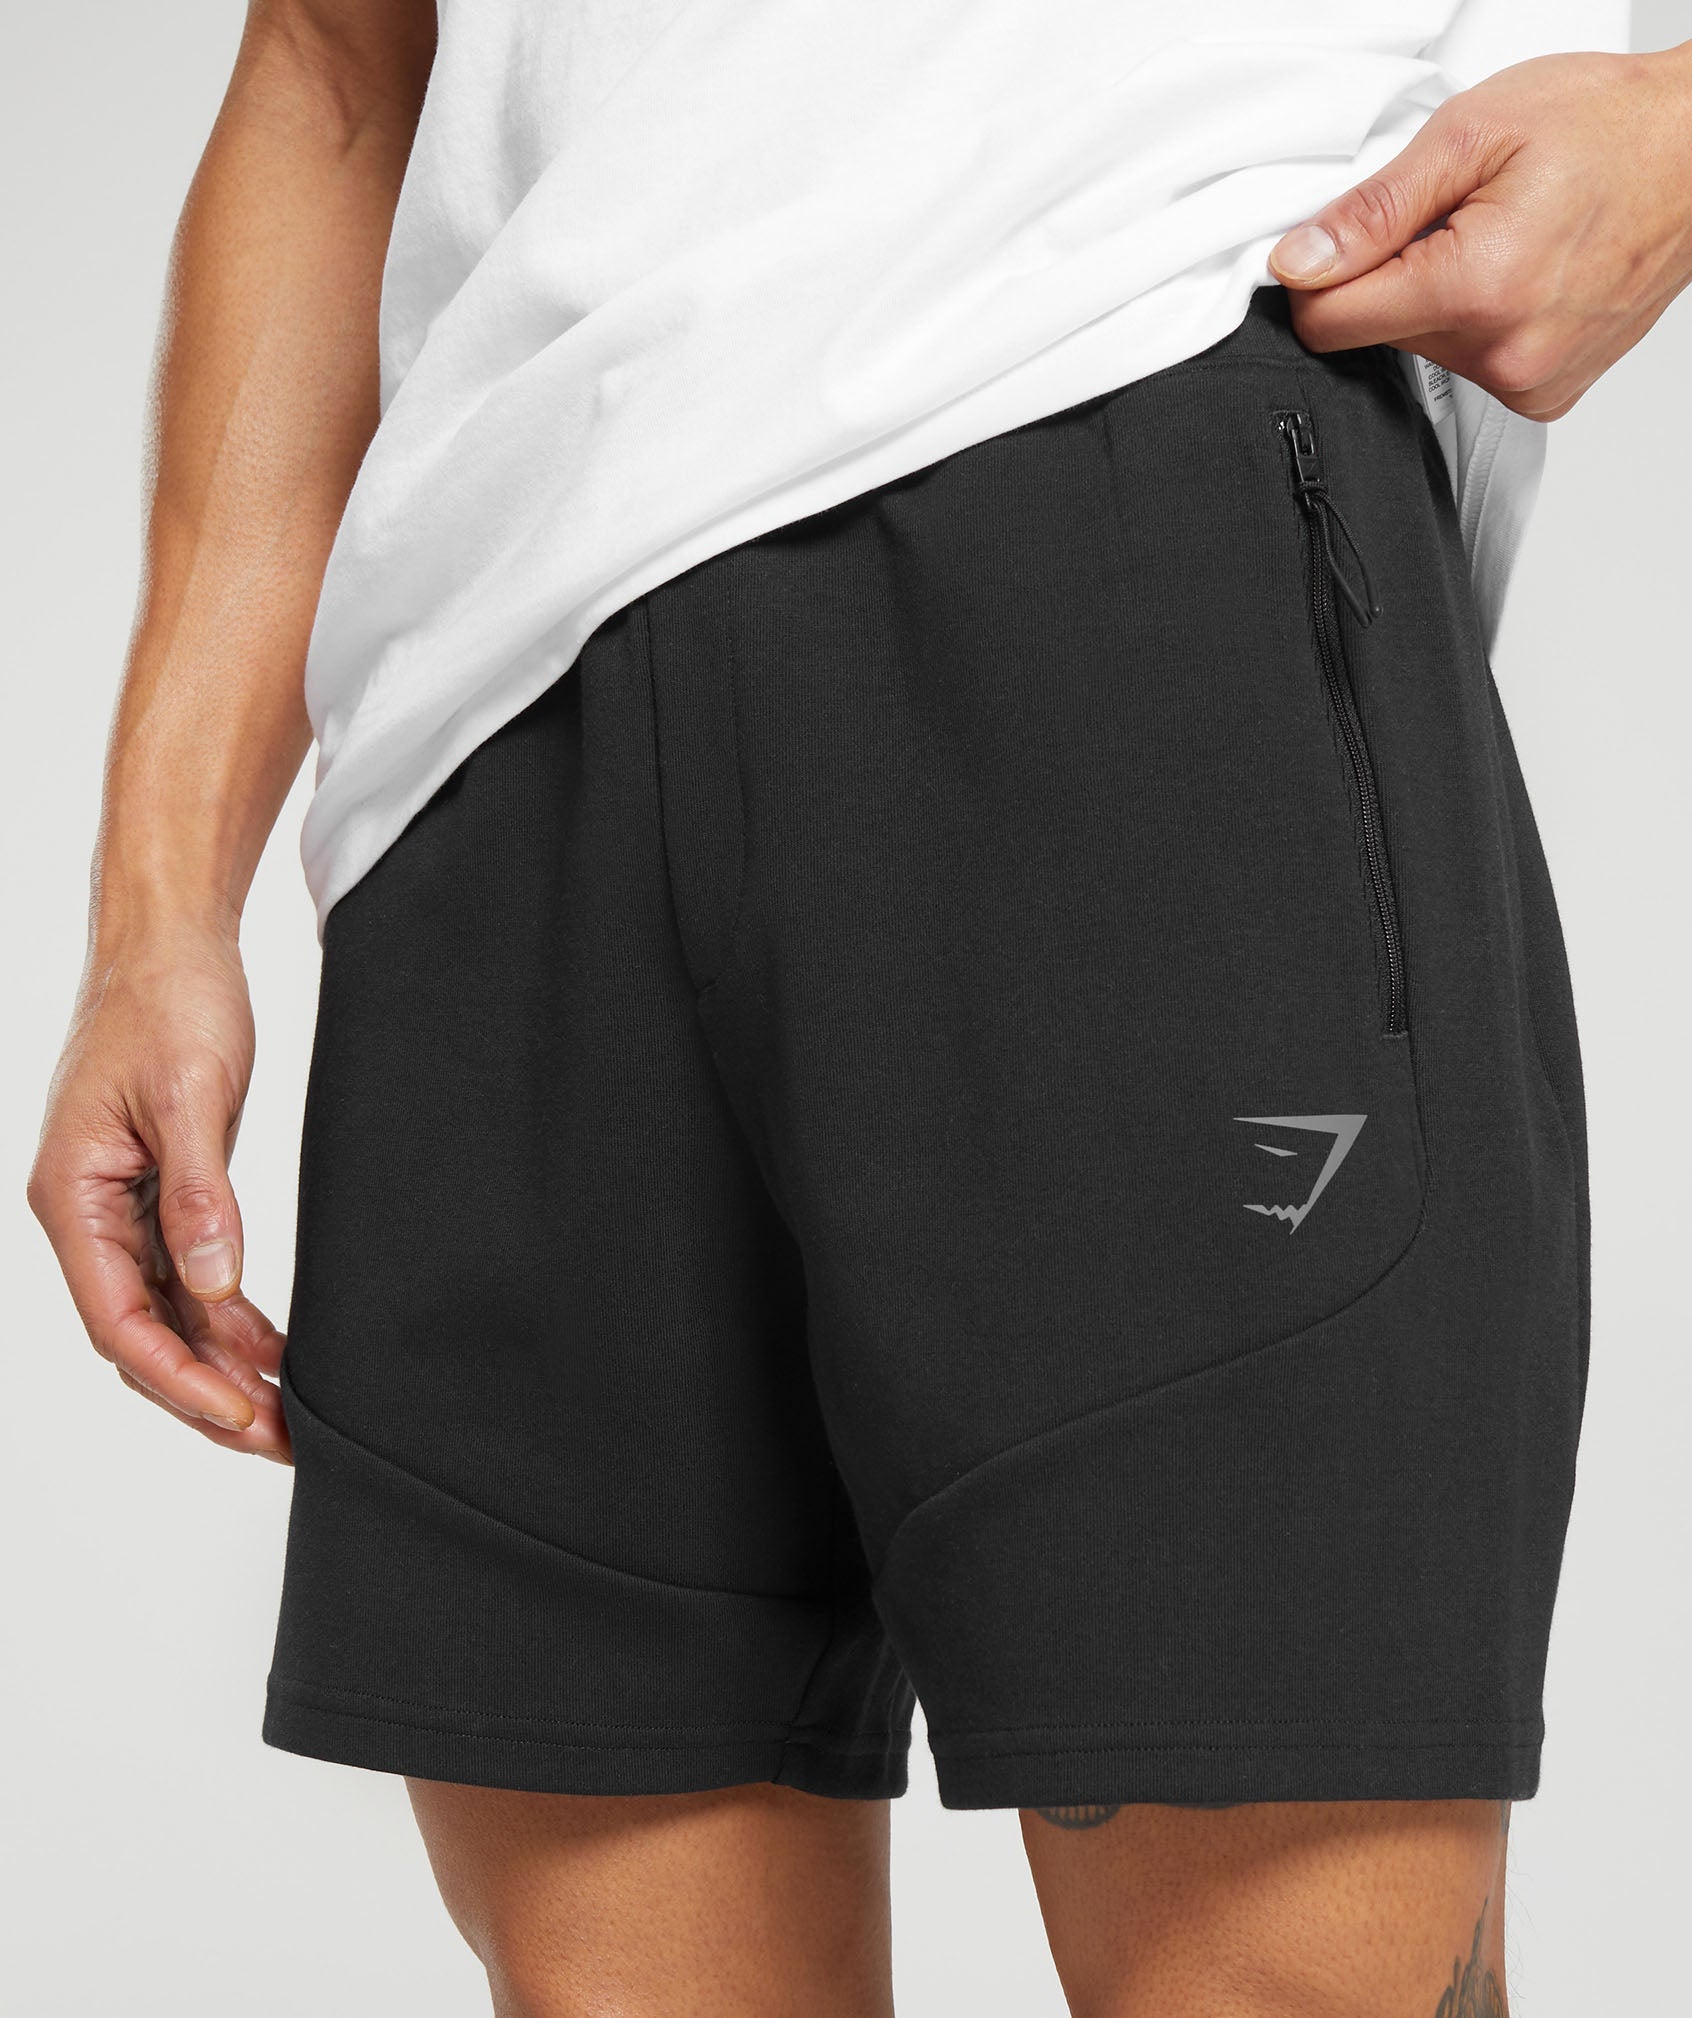 Interlock Tech 6" Shorts in Black - view 6